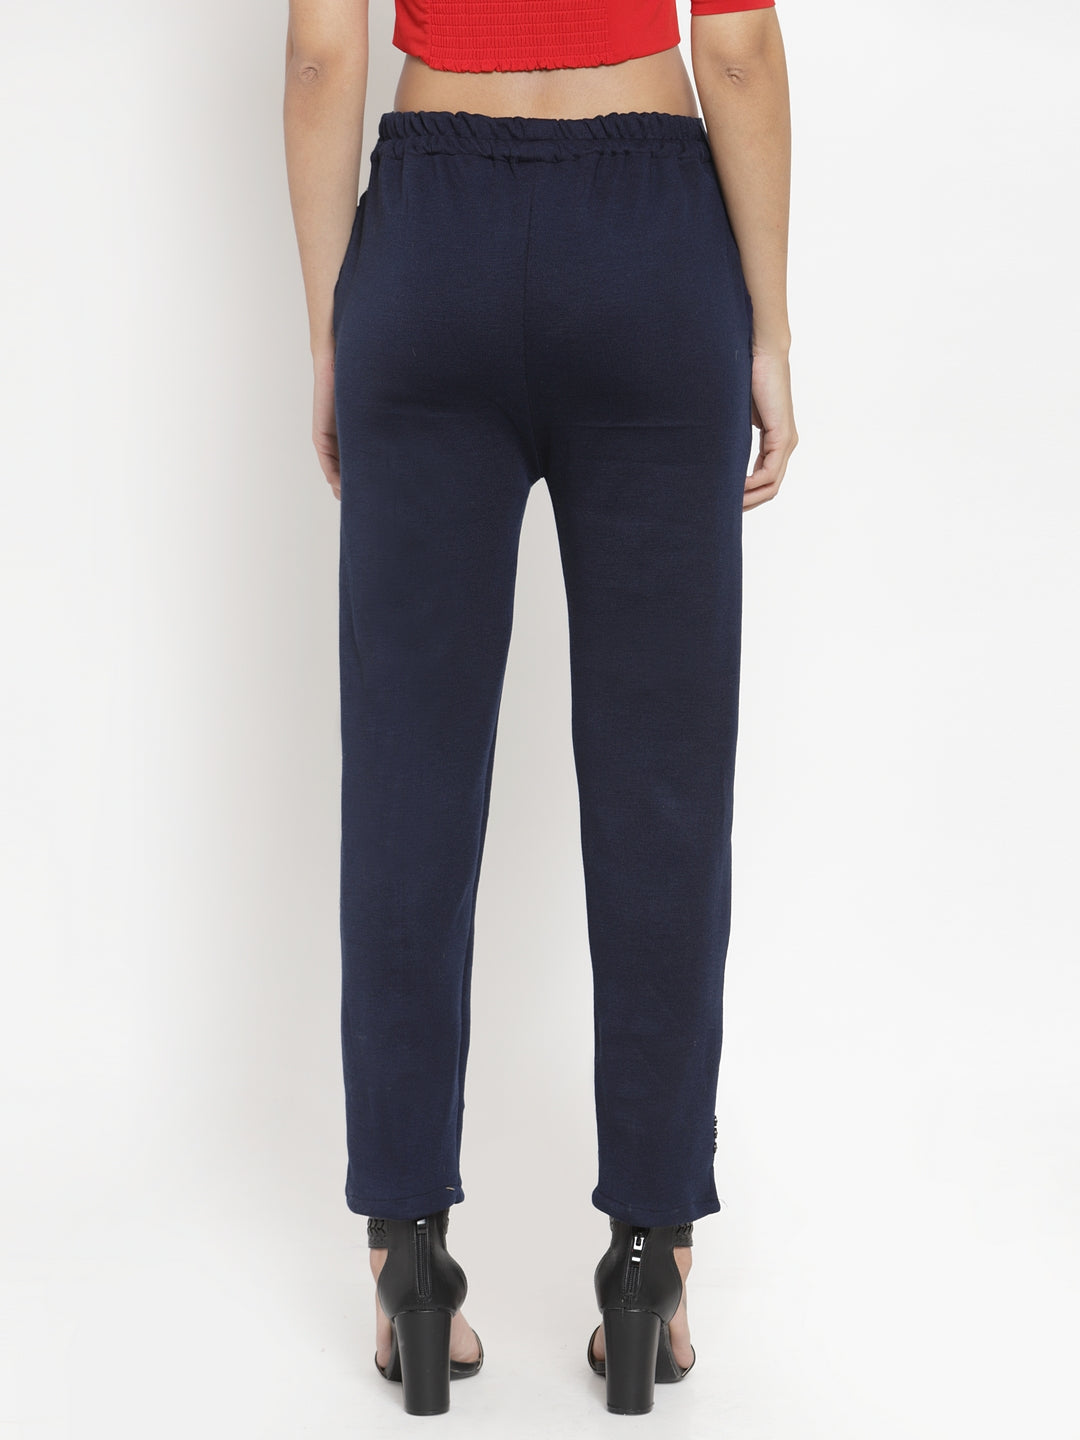 Clora Black & Navy Blue Solid Woolen Trouser (Pack of 2)